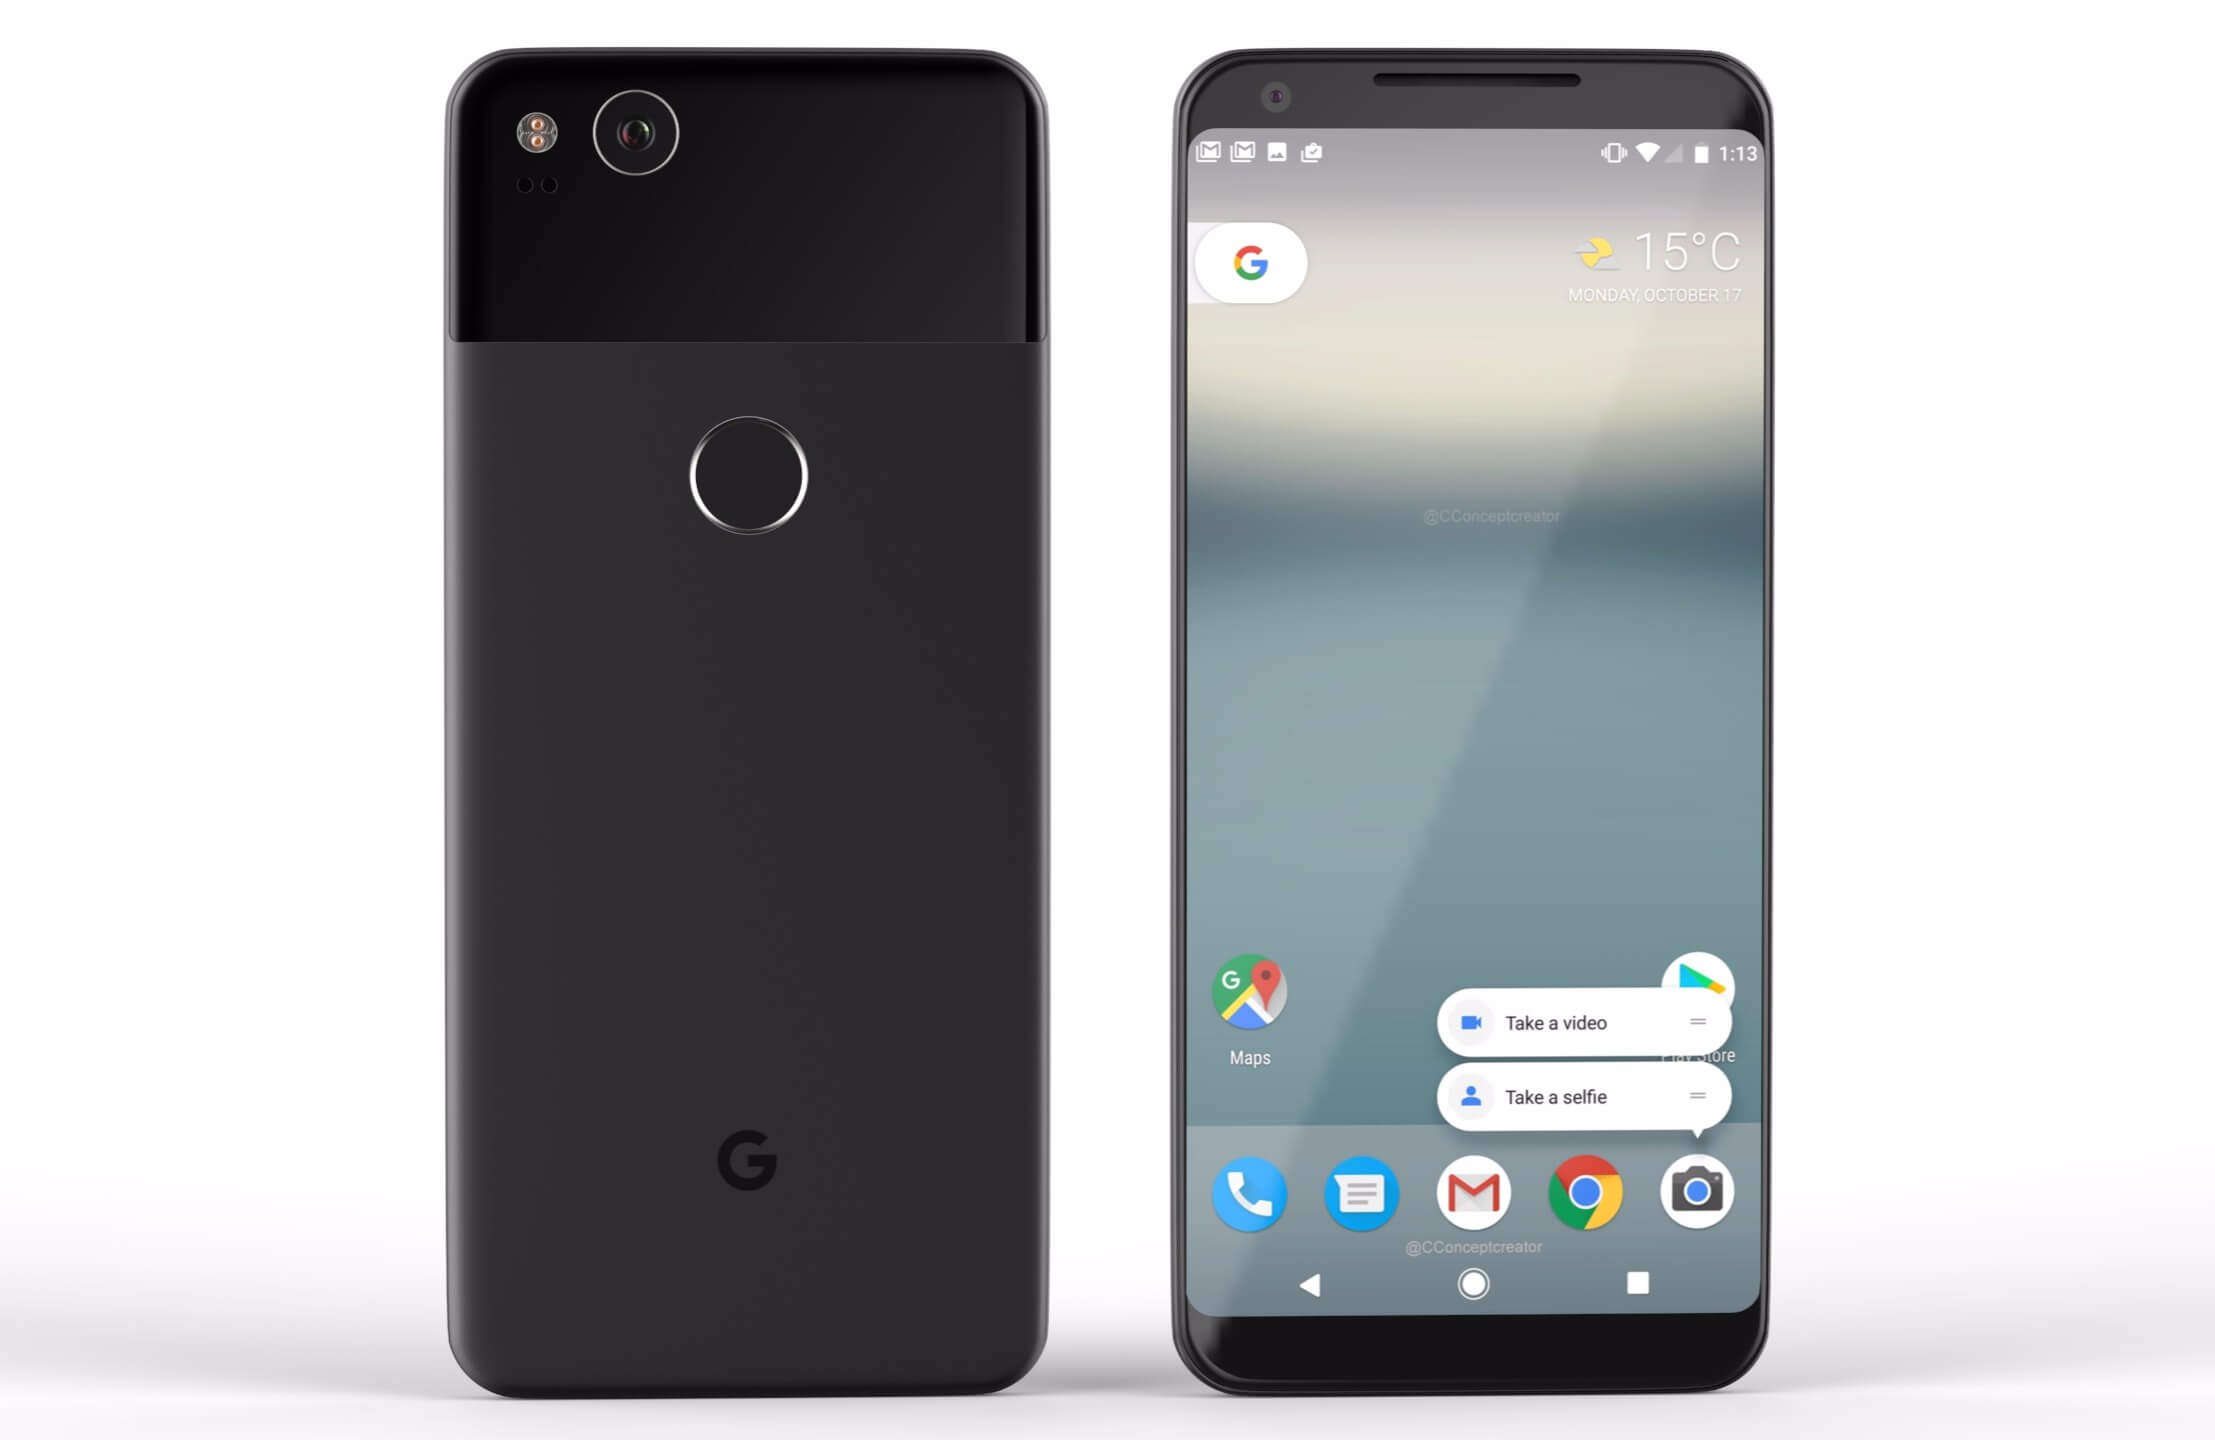 Specificatiile telefoanelor Google Pixel 2